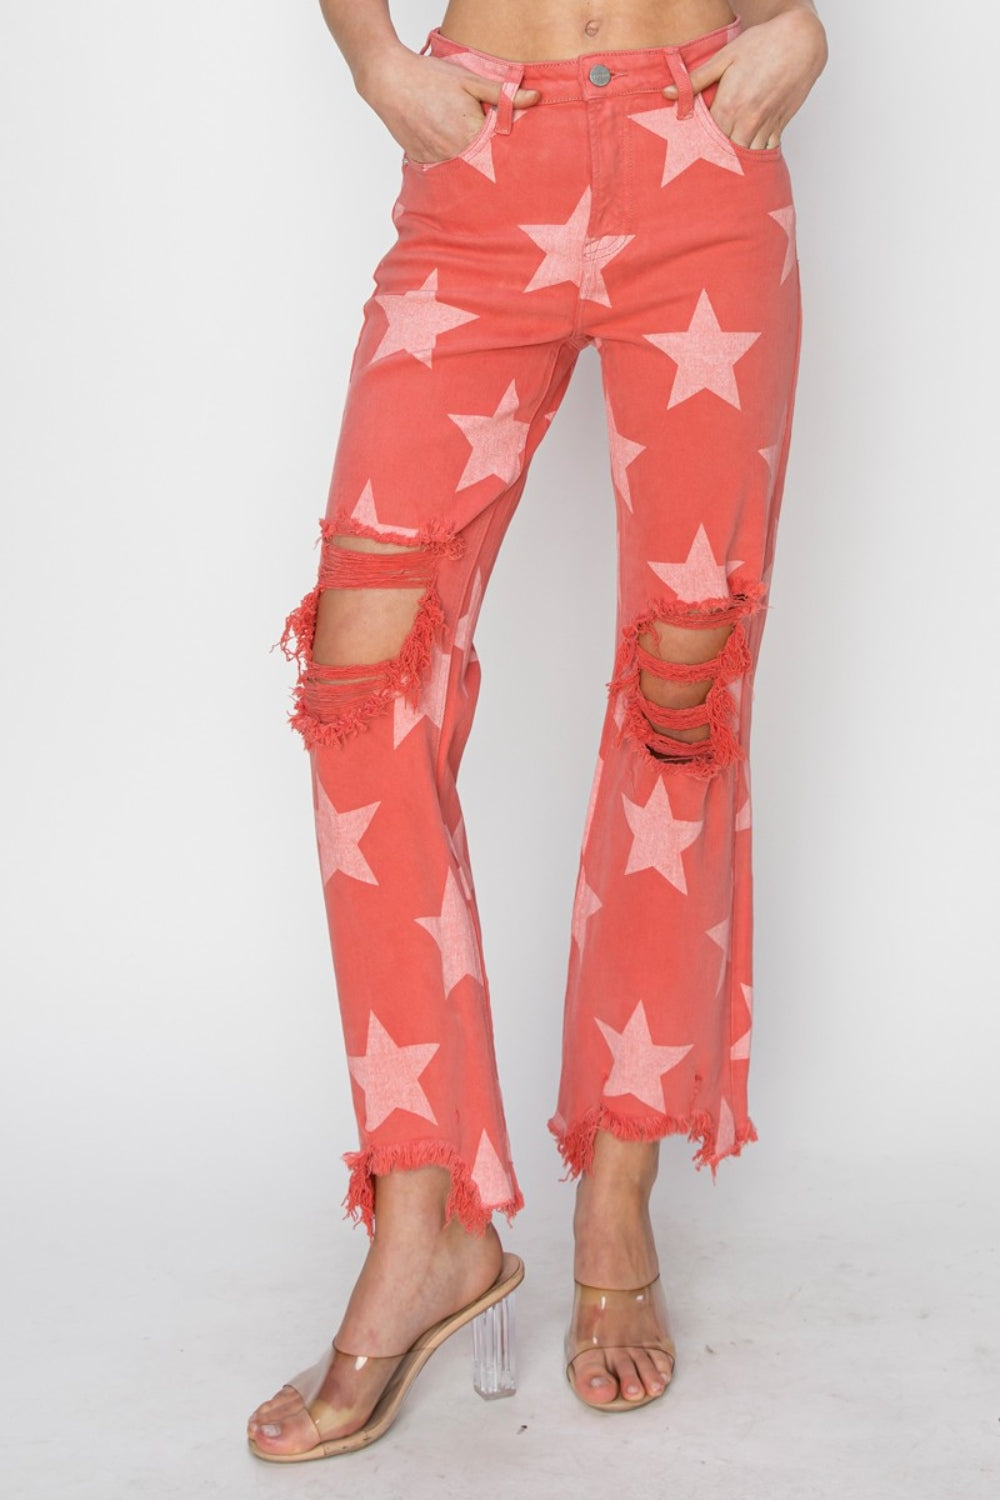 Risen Distressed Star Pattern Jeans